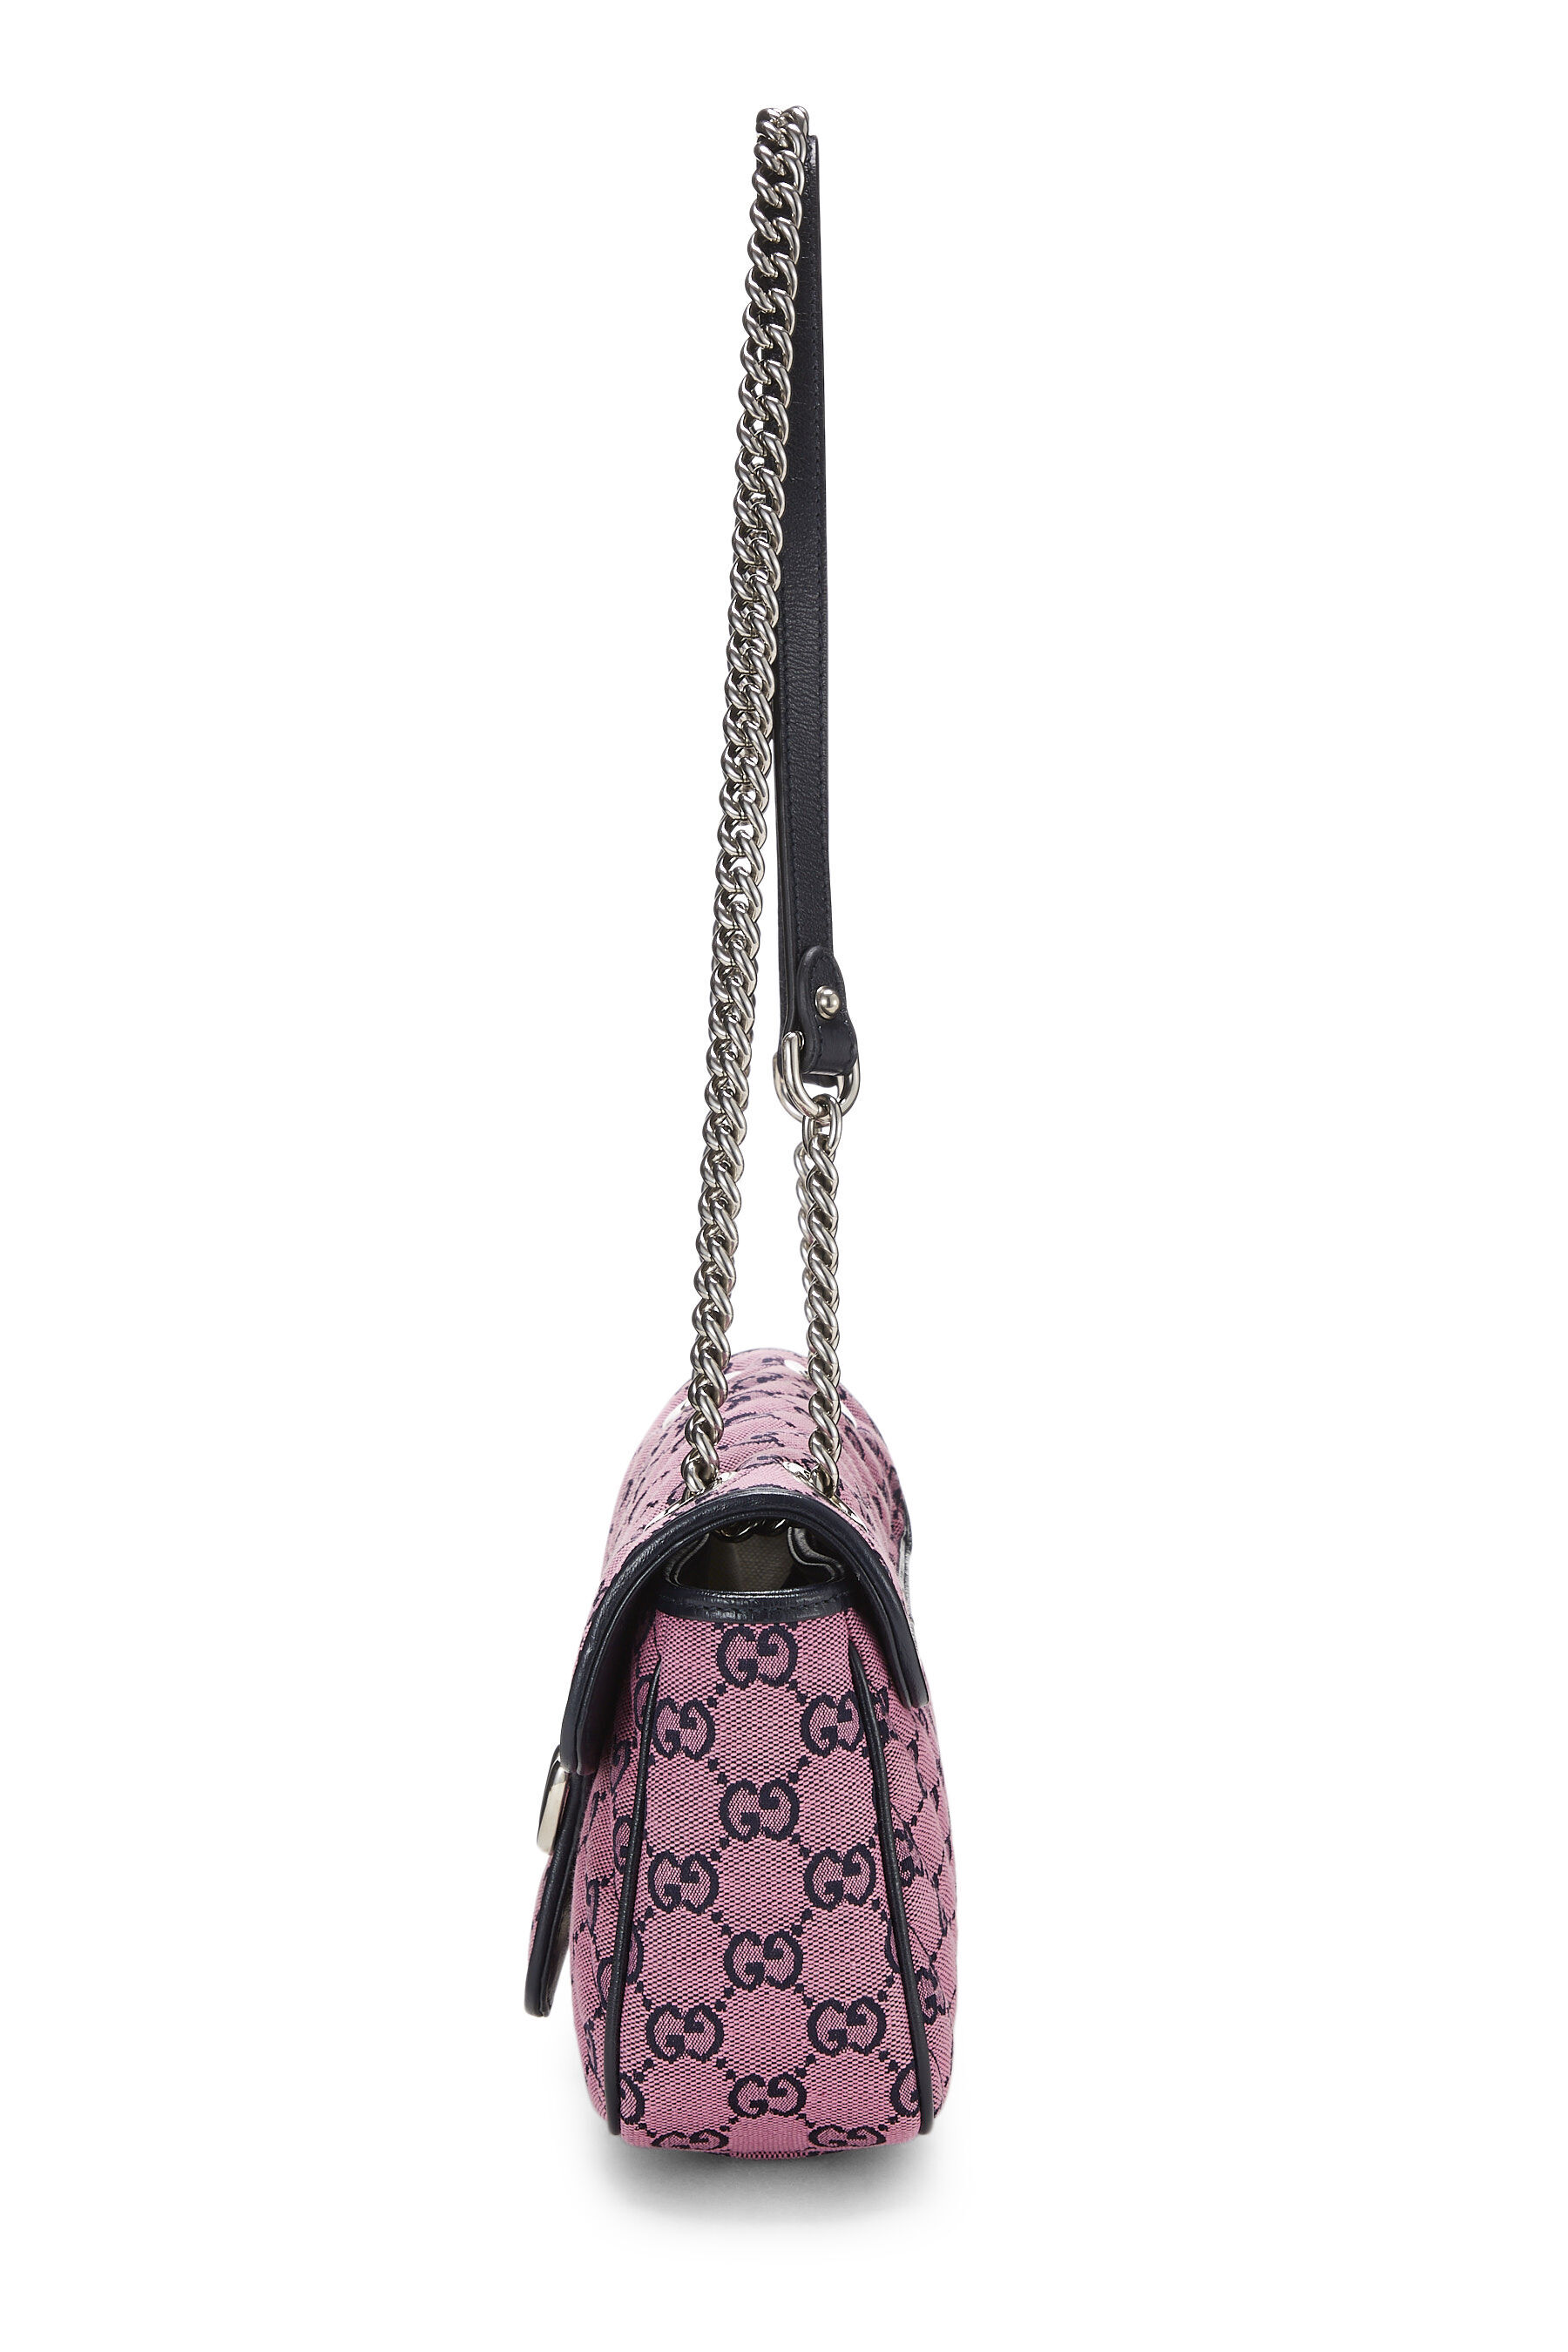 Gucci Pink Original GG Canvas Marmont Shoulder Bag Small ...